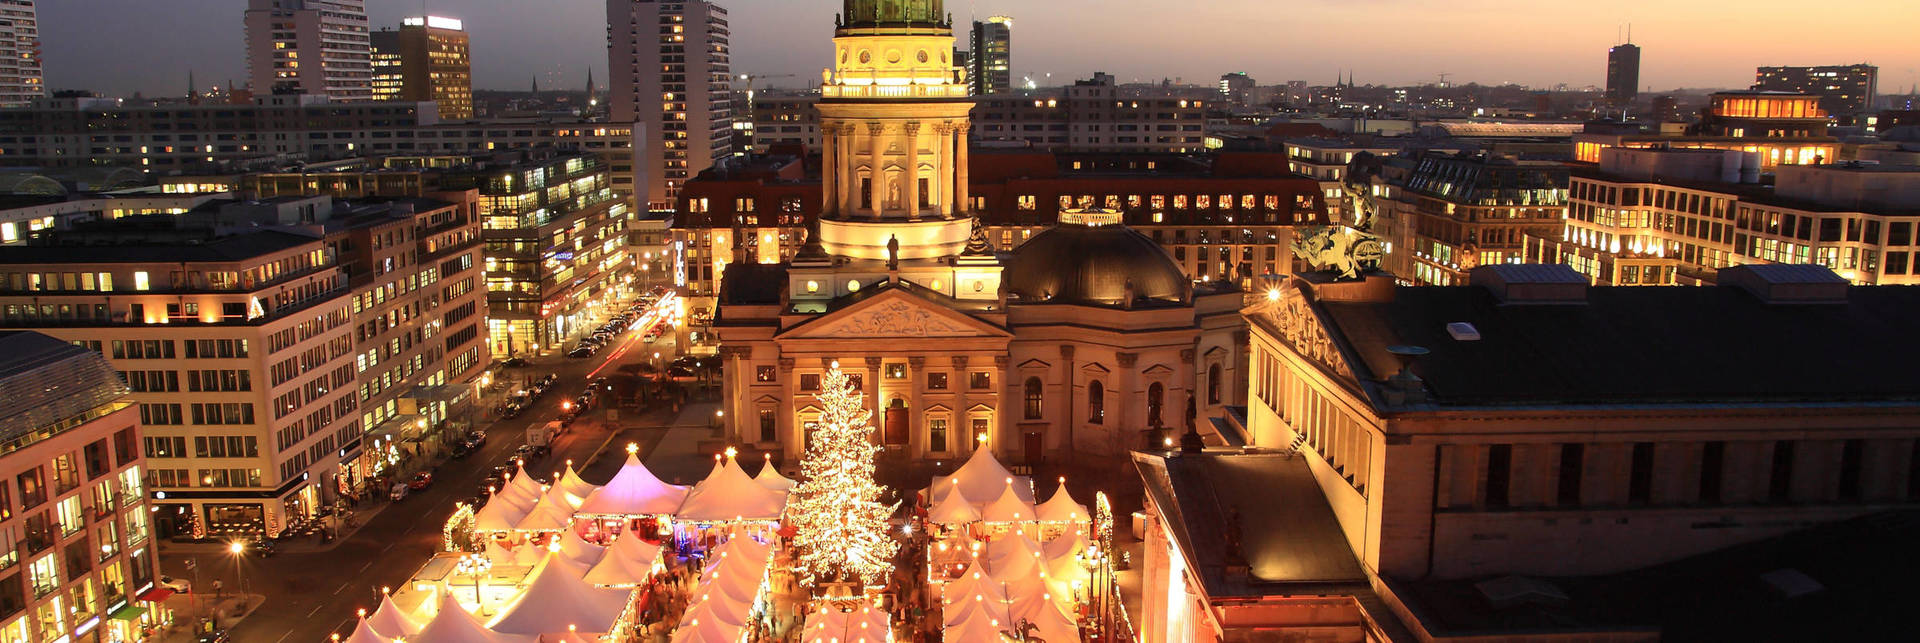 Weihnachtsshopping in Berlin - H-Hotels.com - Offizielle Webseite